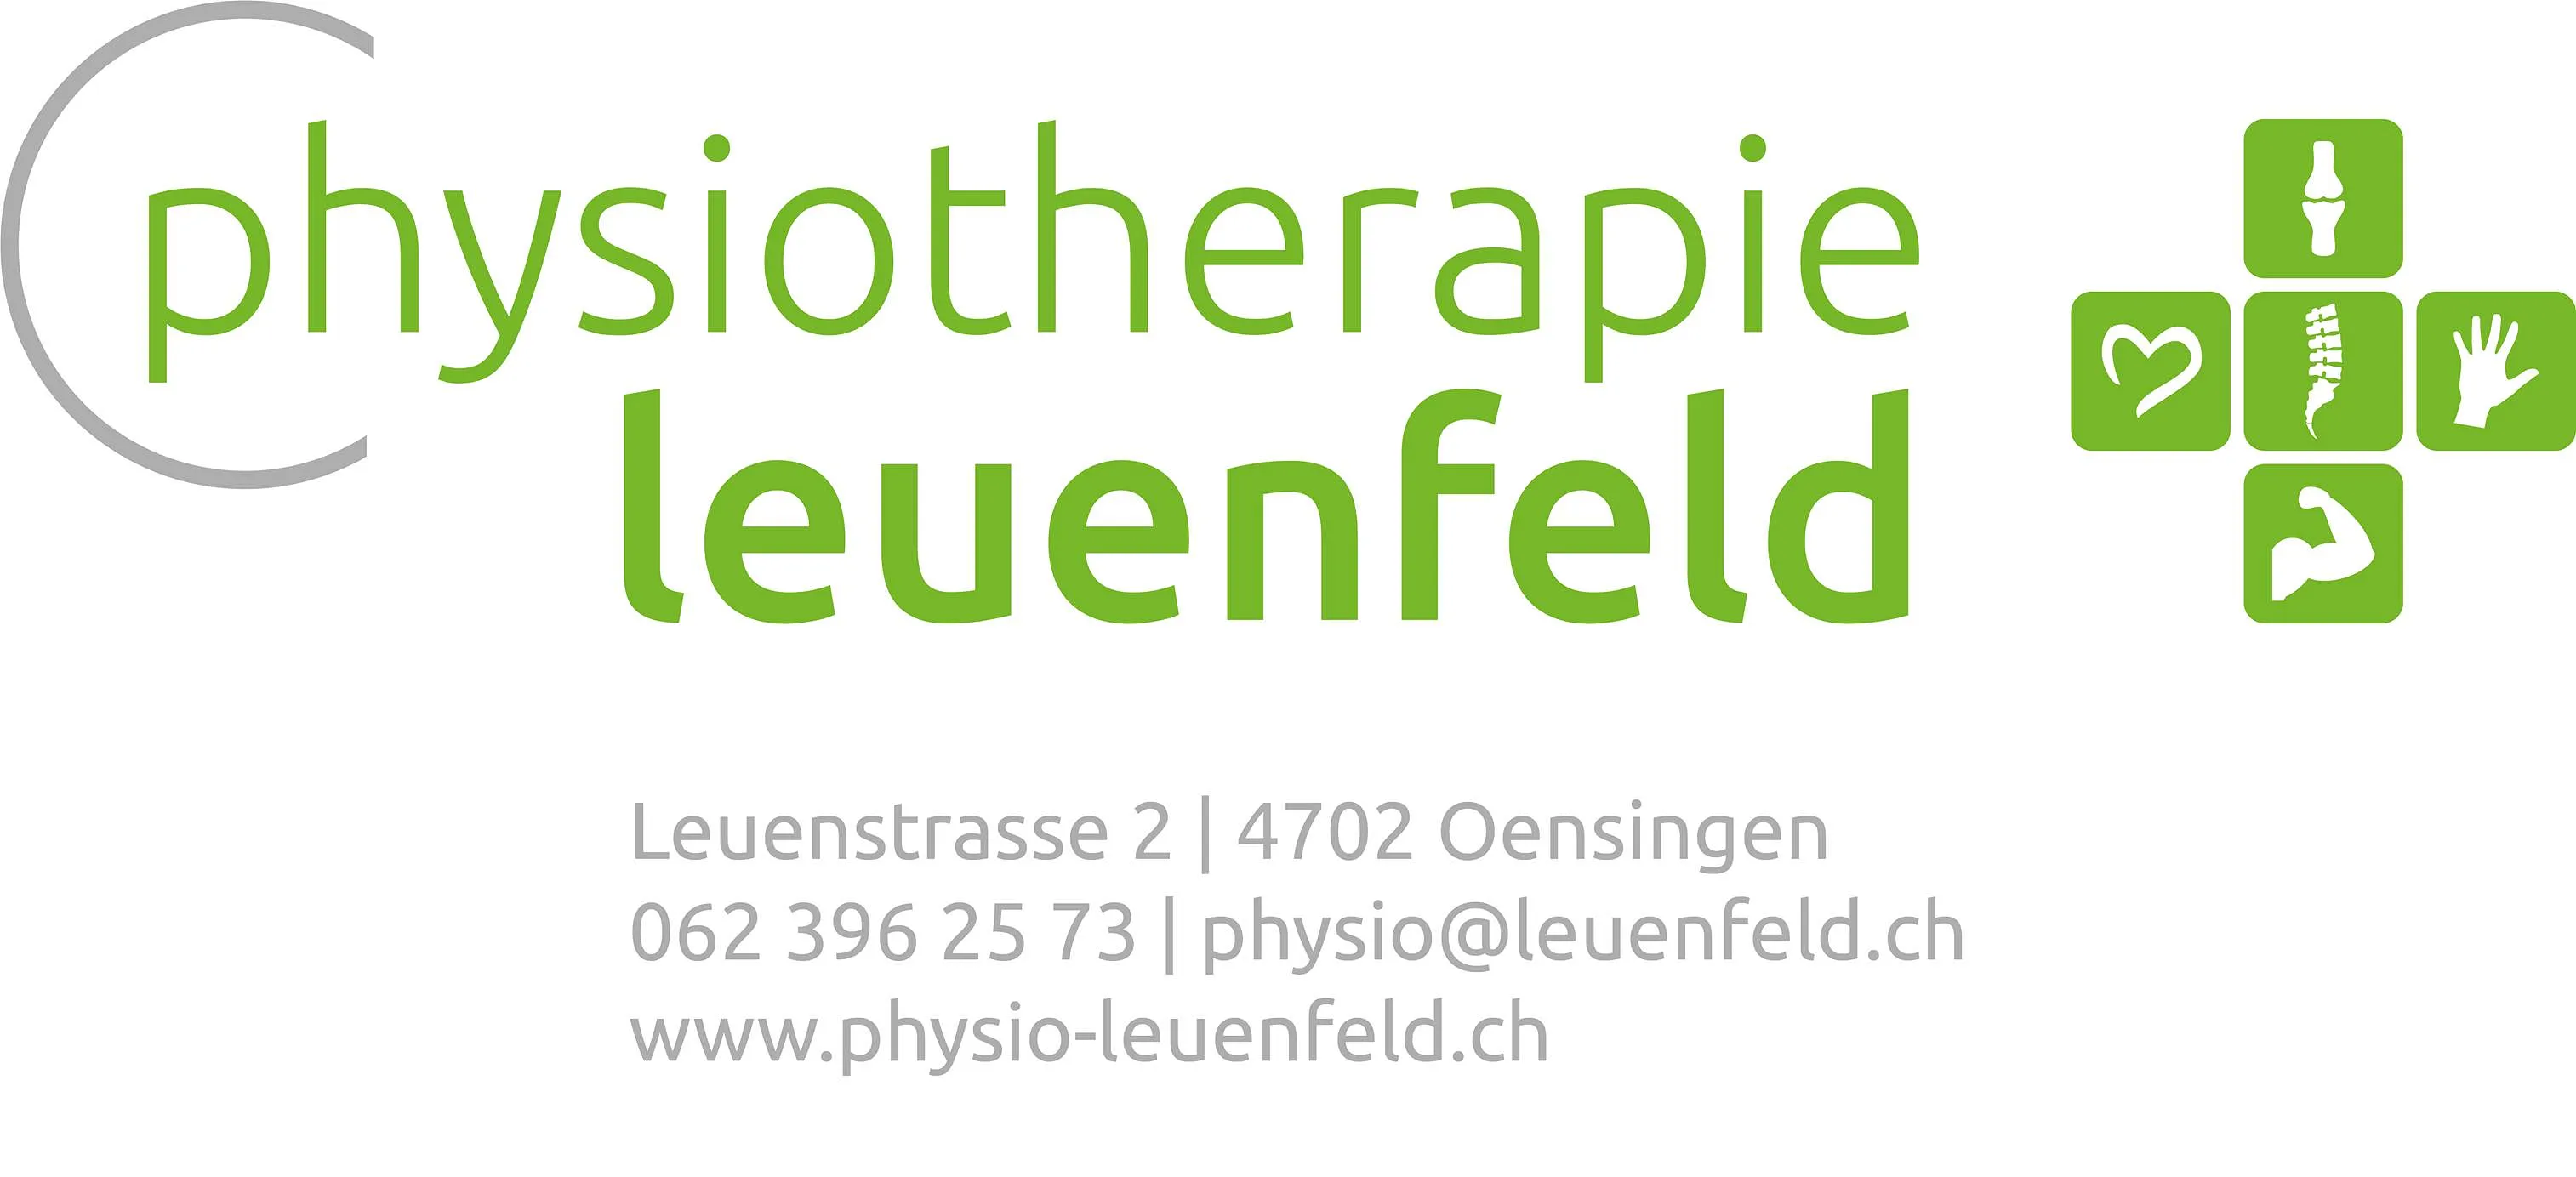 Physiotherapie Leuenfeld